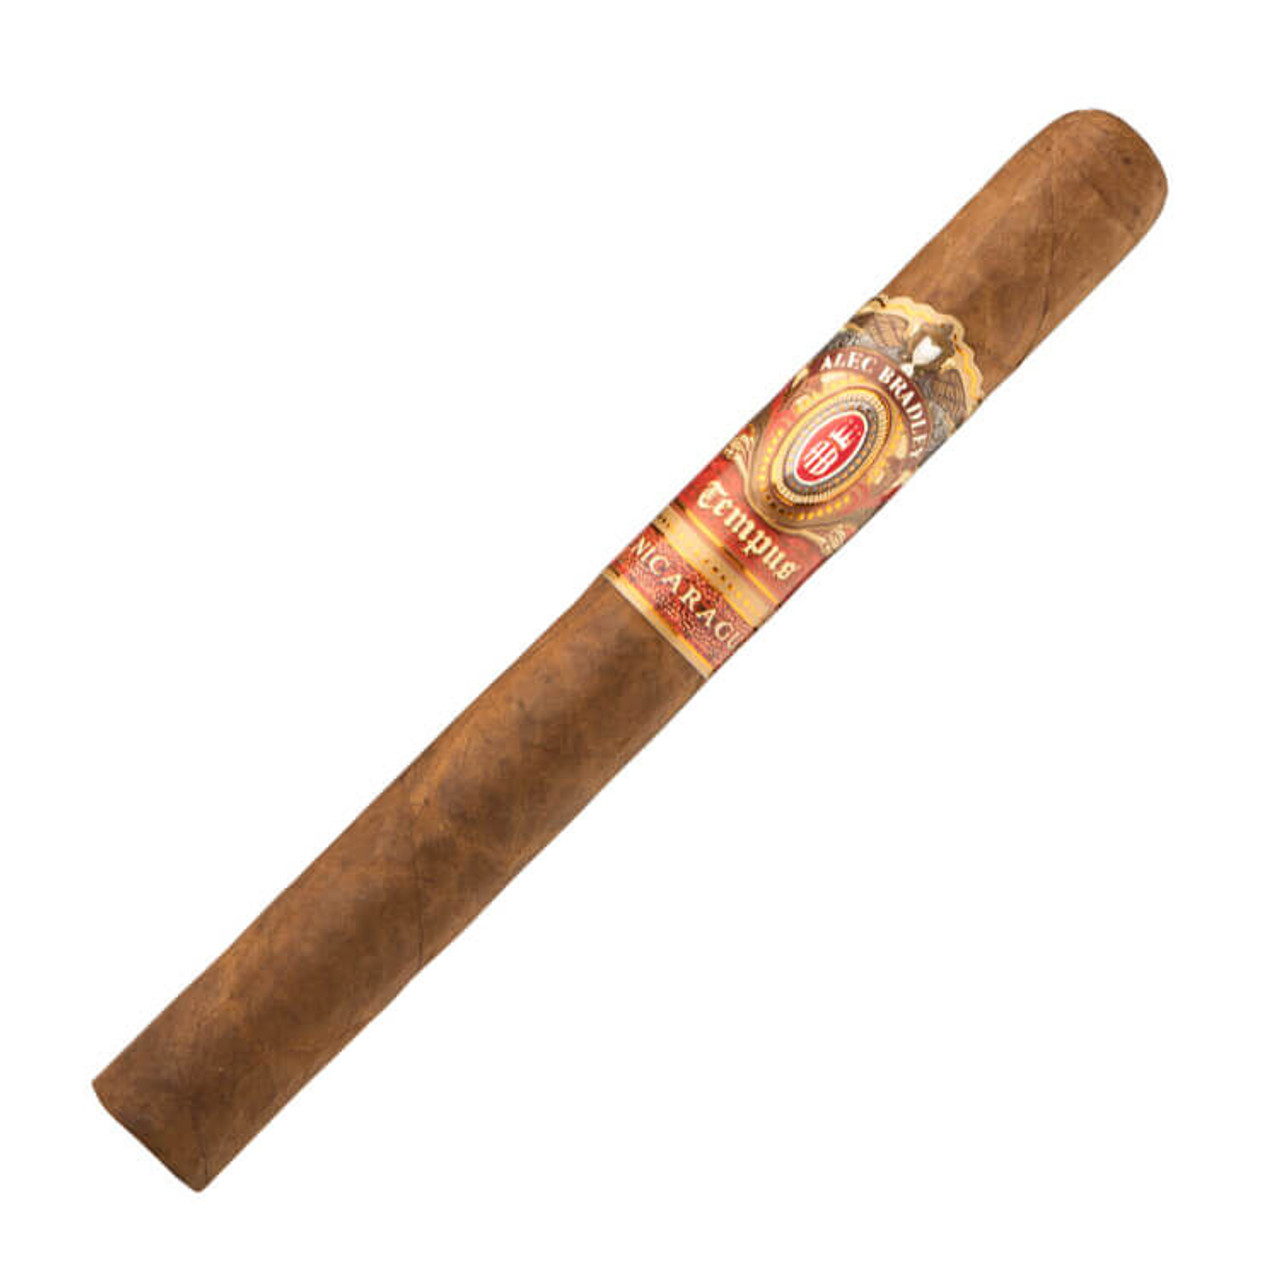 Alec Bradley Tempus Nicaragua Churchill Cigars - 7 x 49 Single